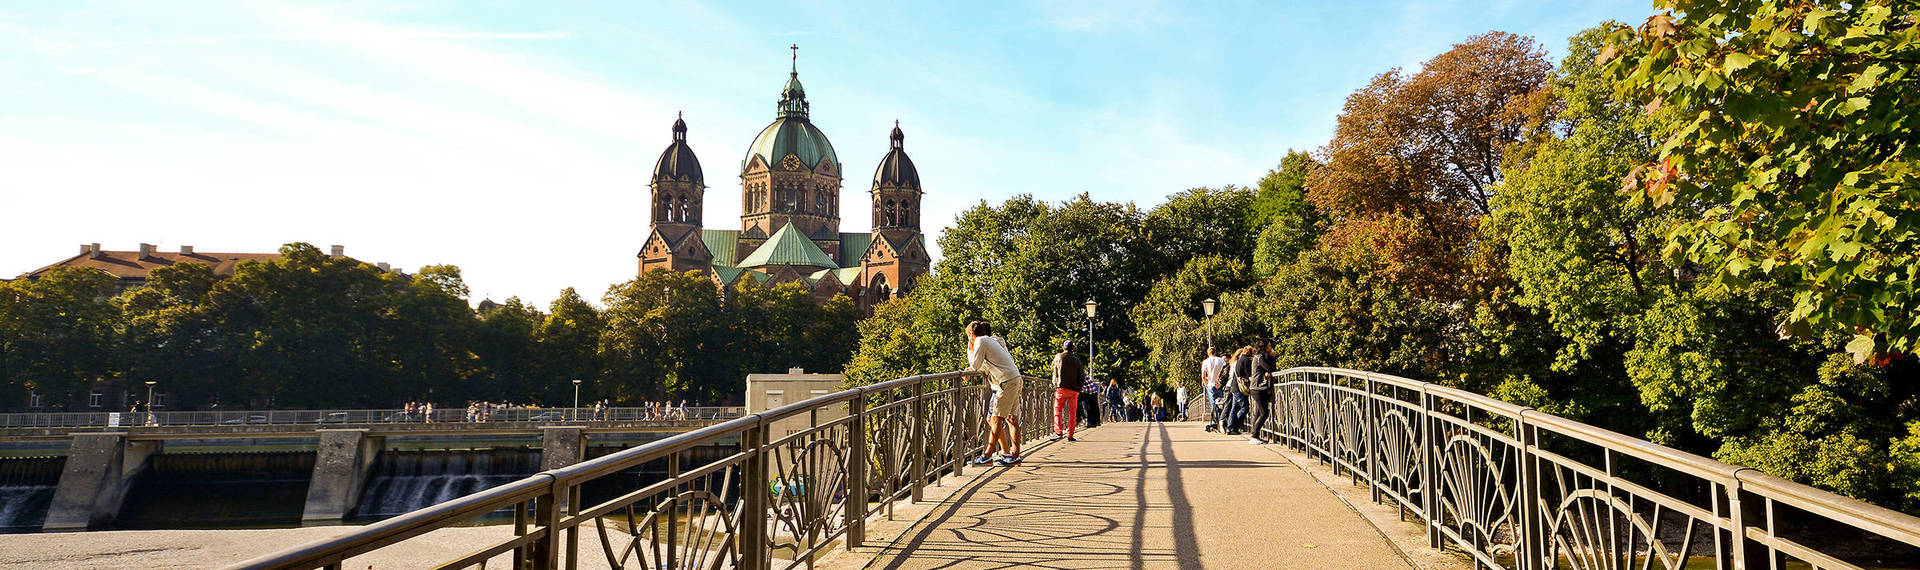 Sankt Lukas Kirche - H-Hotels in München - Offizielle Webseite